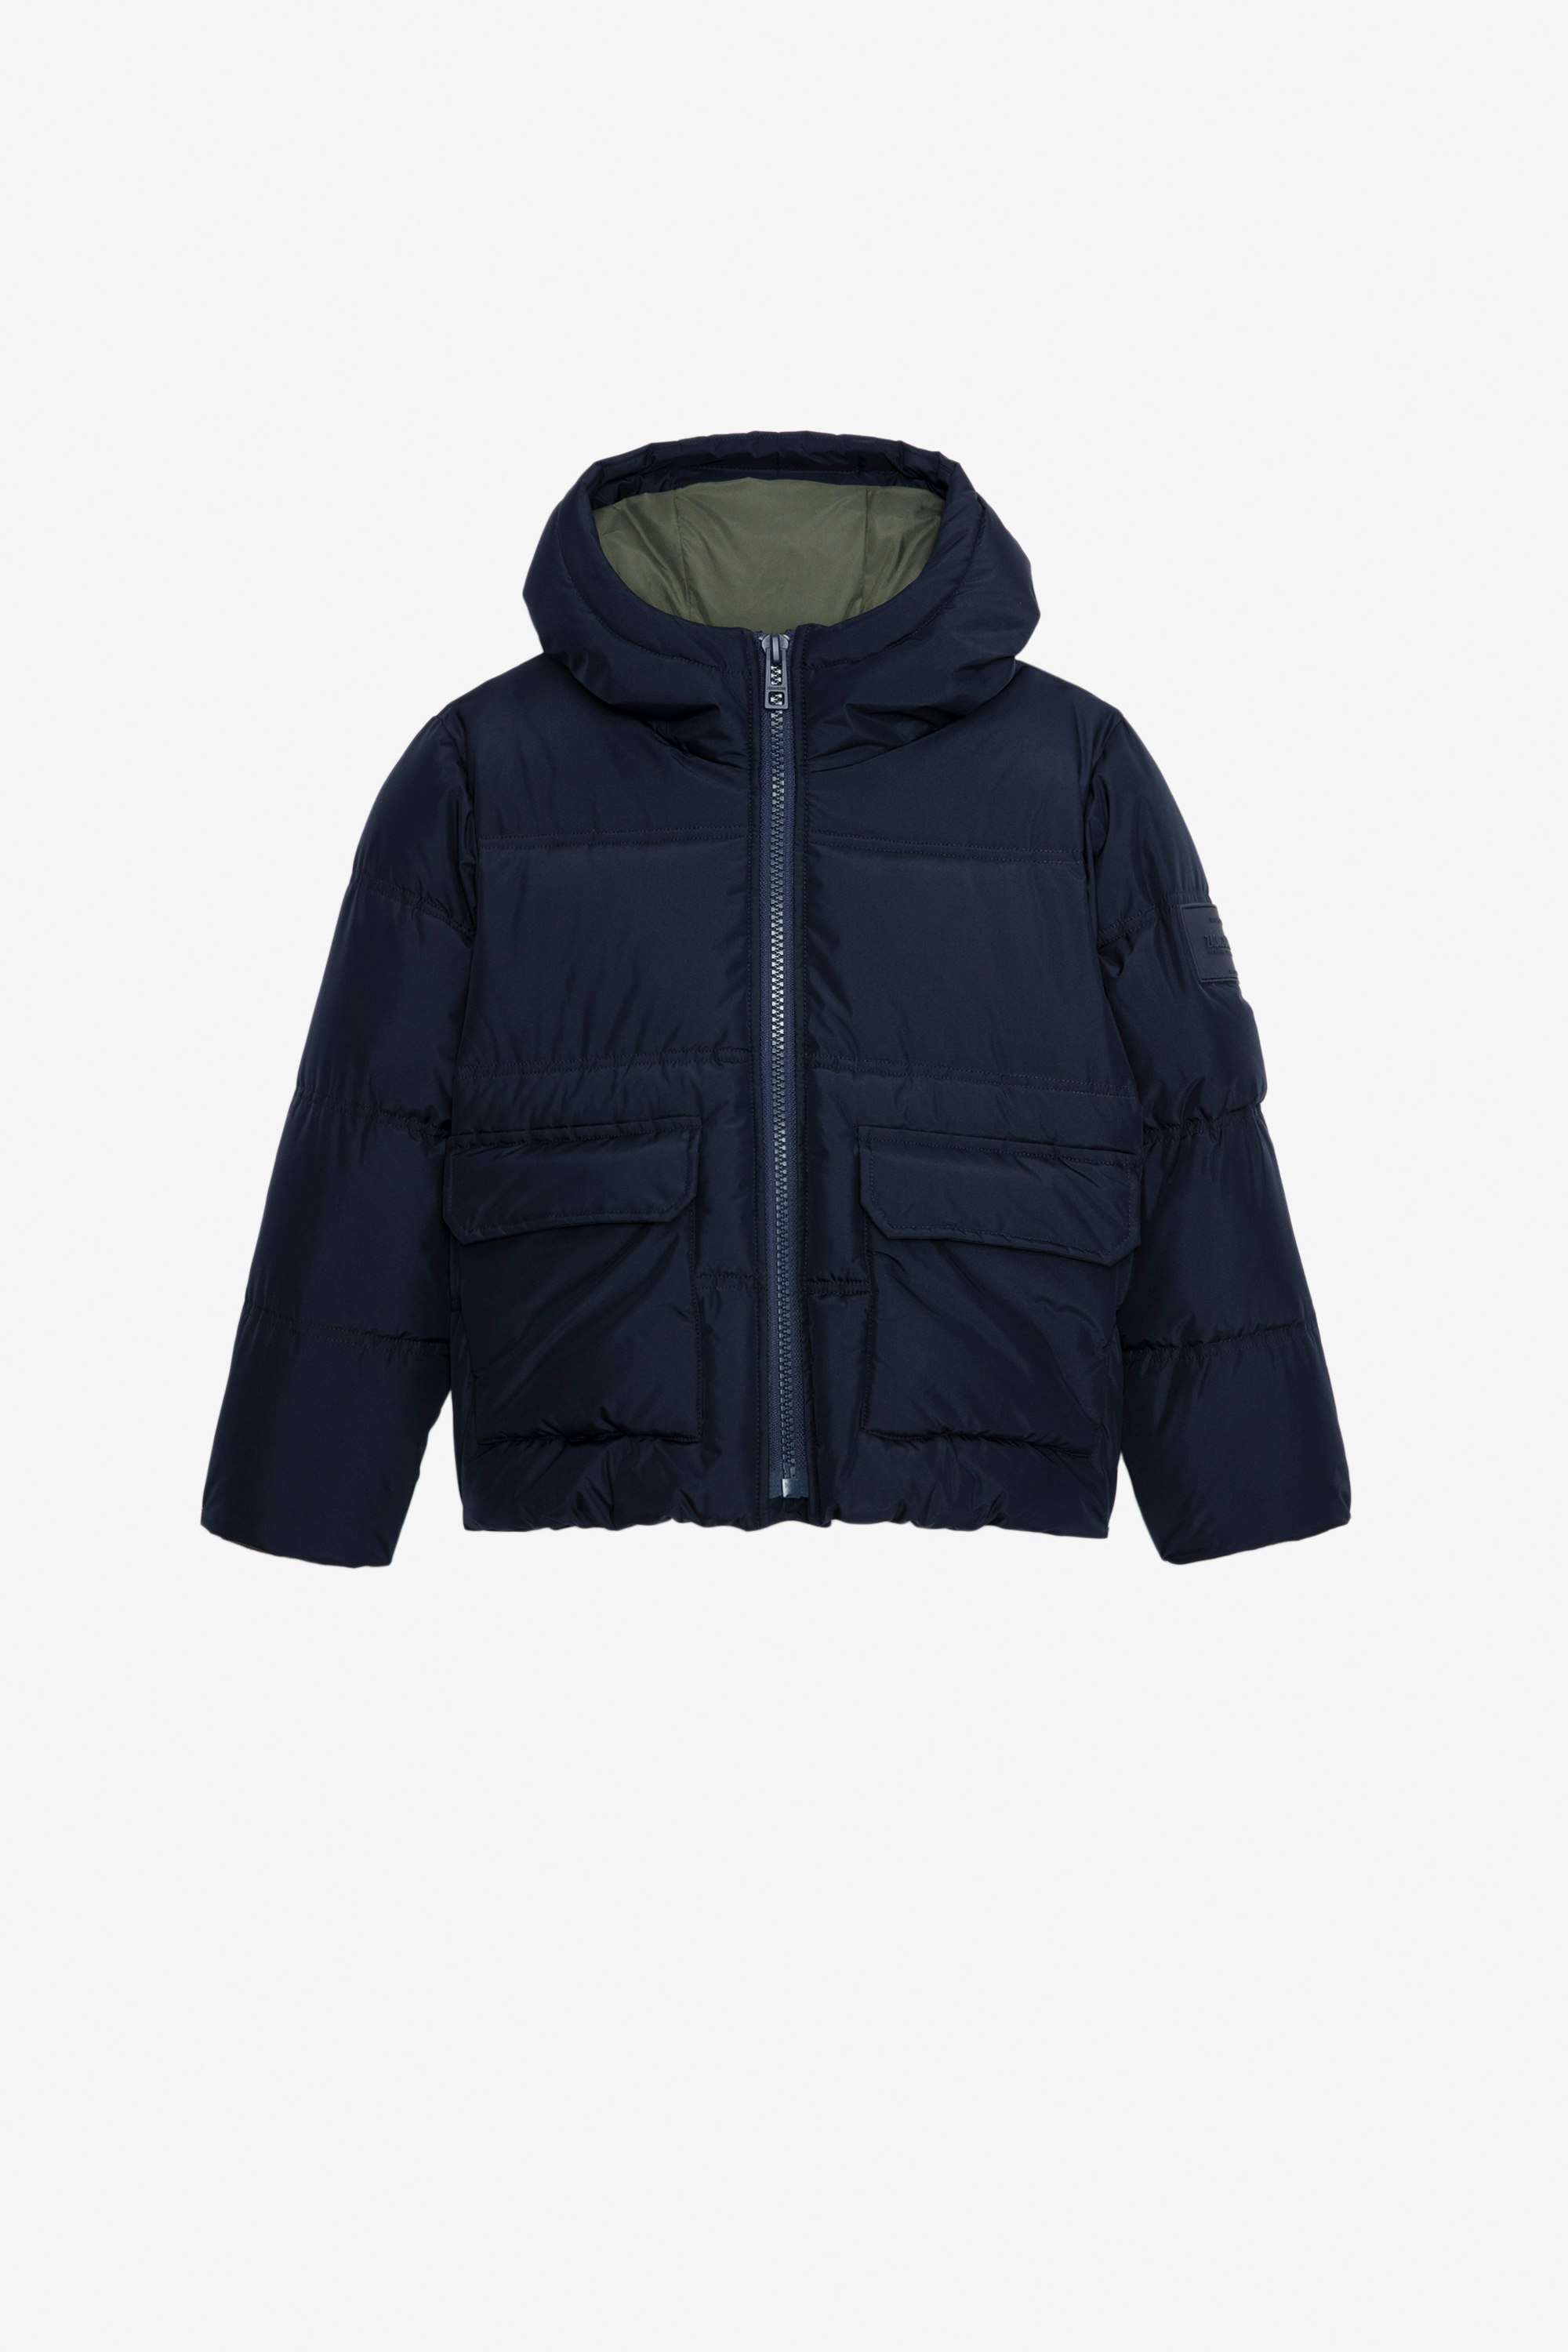 Dano Boys’ Puffer Coat Boys’ navy blue water-repellent hooded puffer coat.